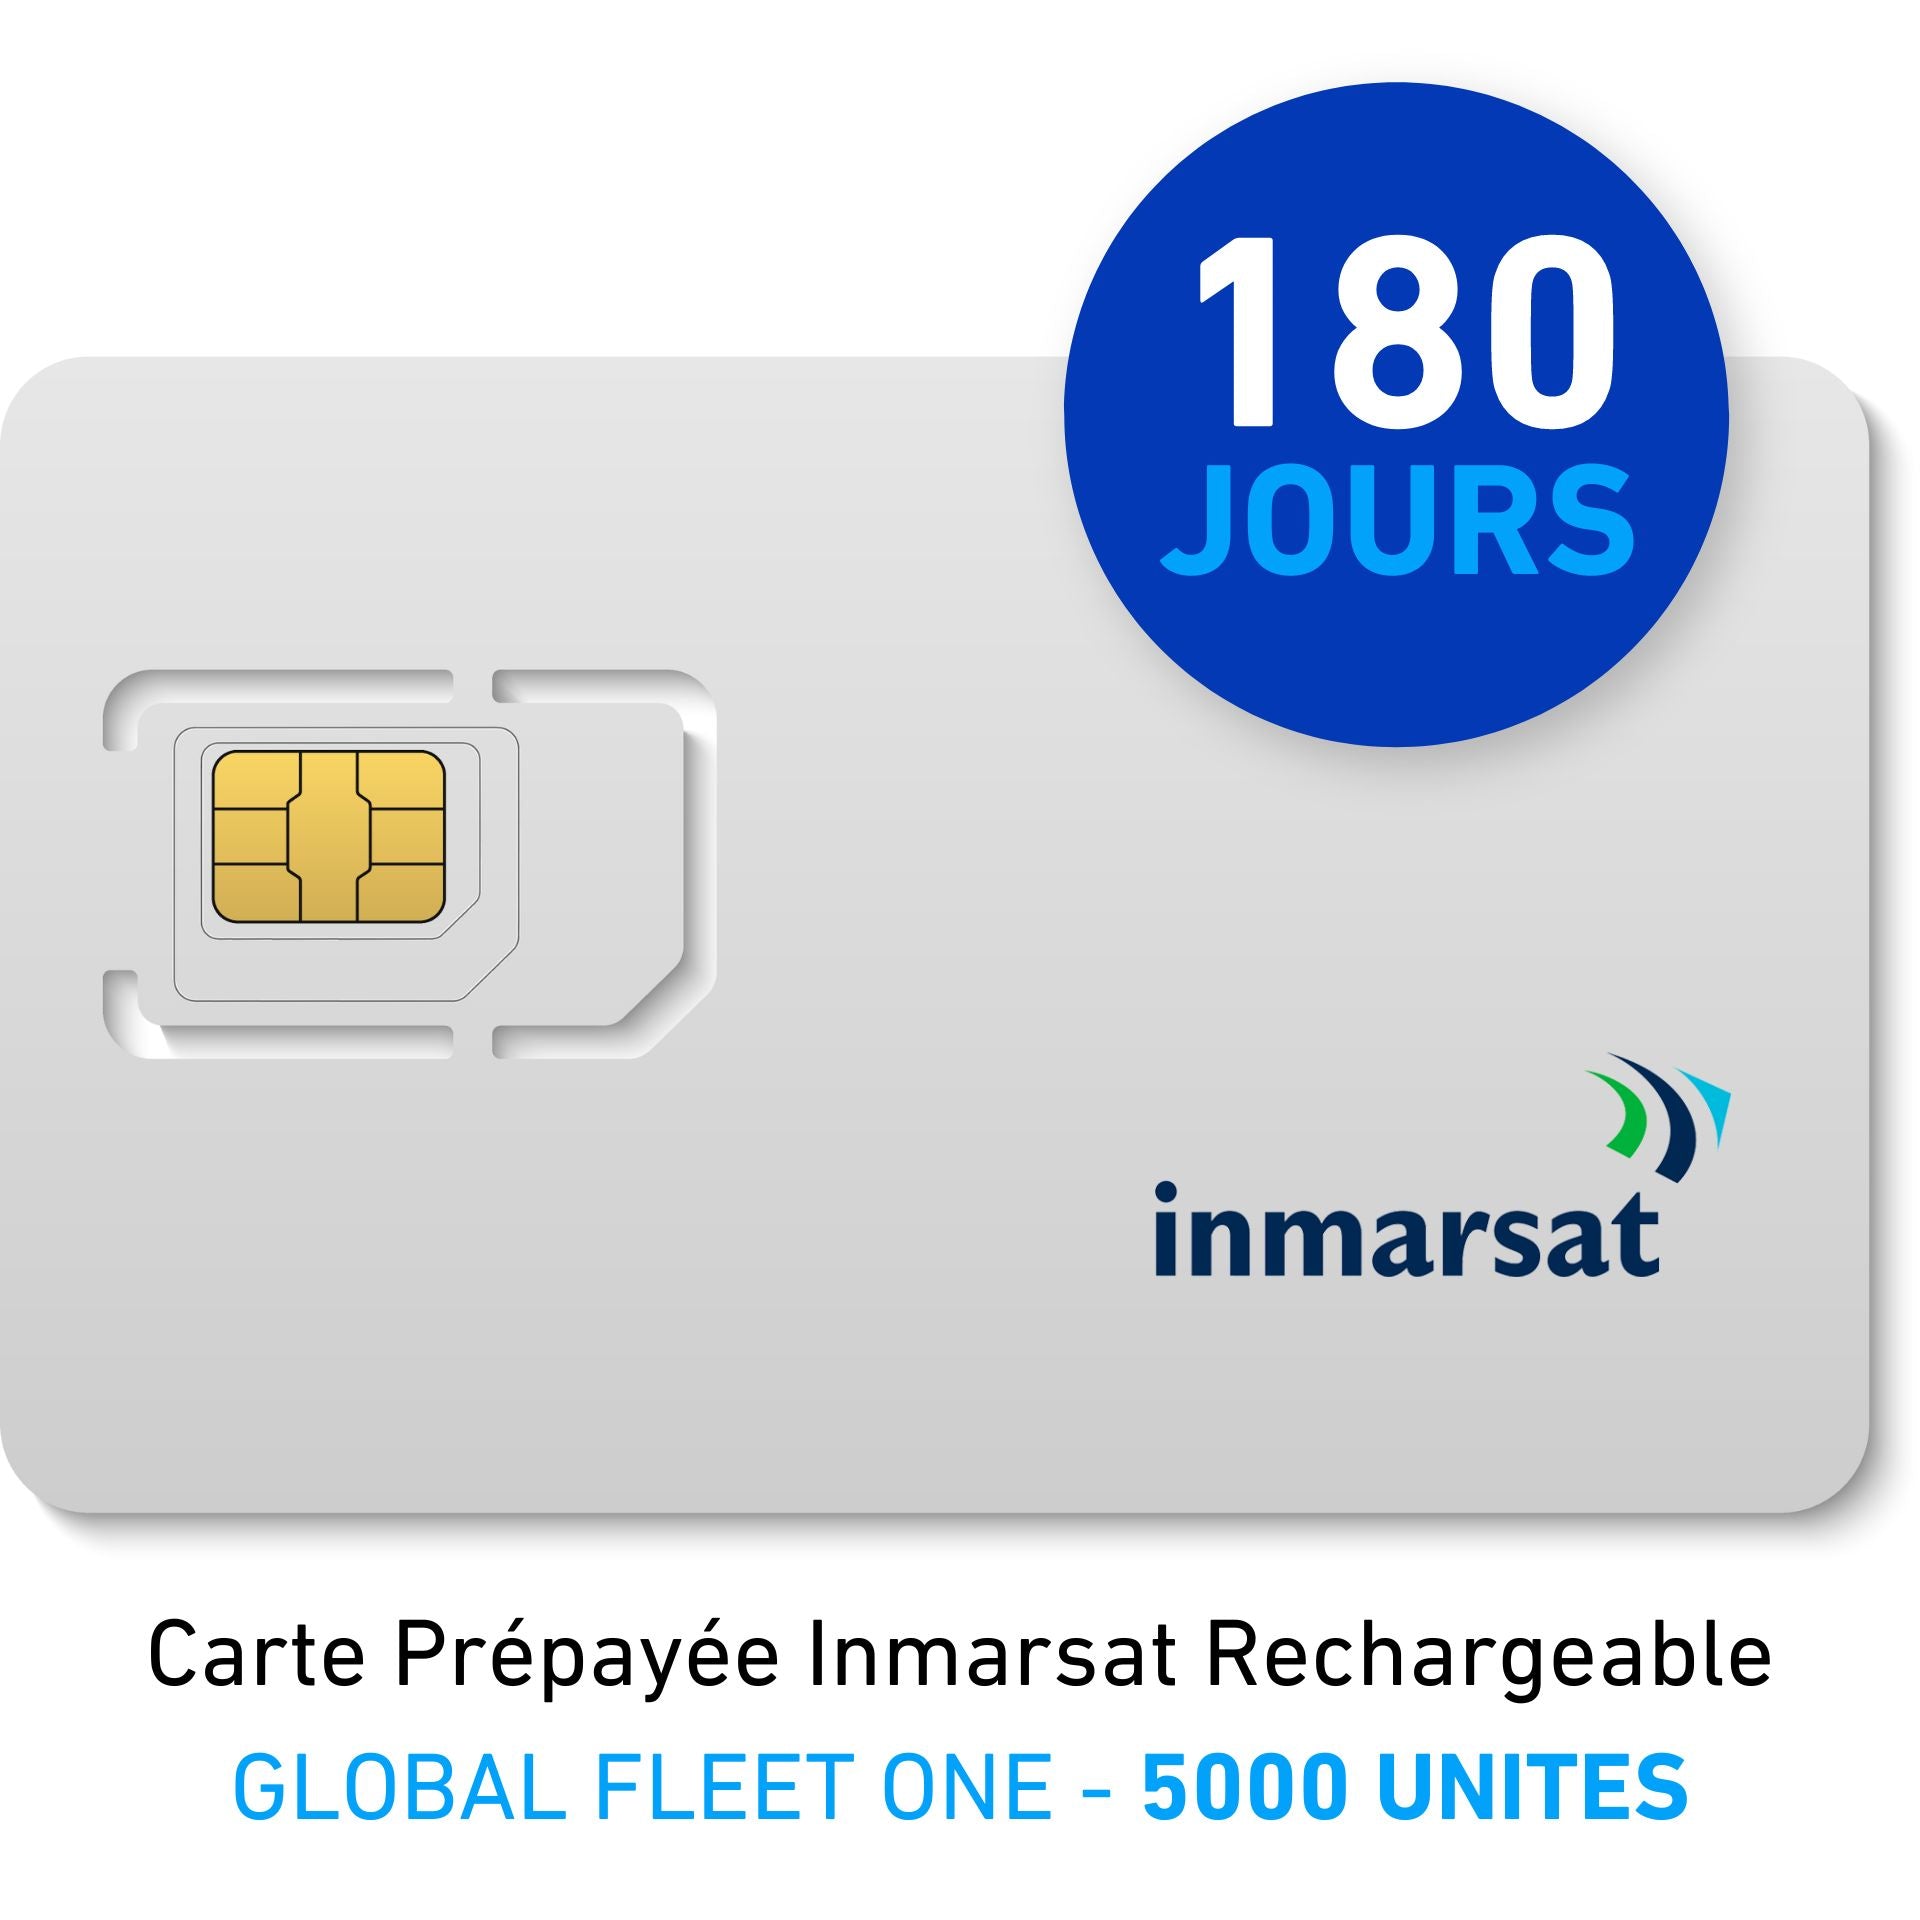 INMARSAT Prepaid-Karte Aufladbar GLOBAL FLEET ONE - 5000 UNITS - 180 TAGE